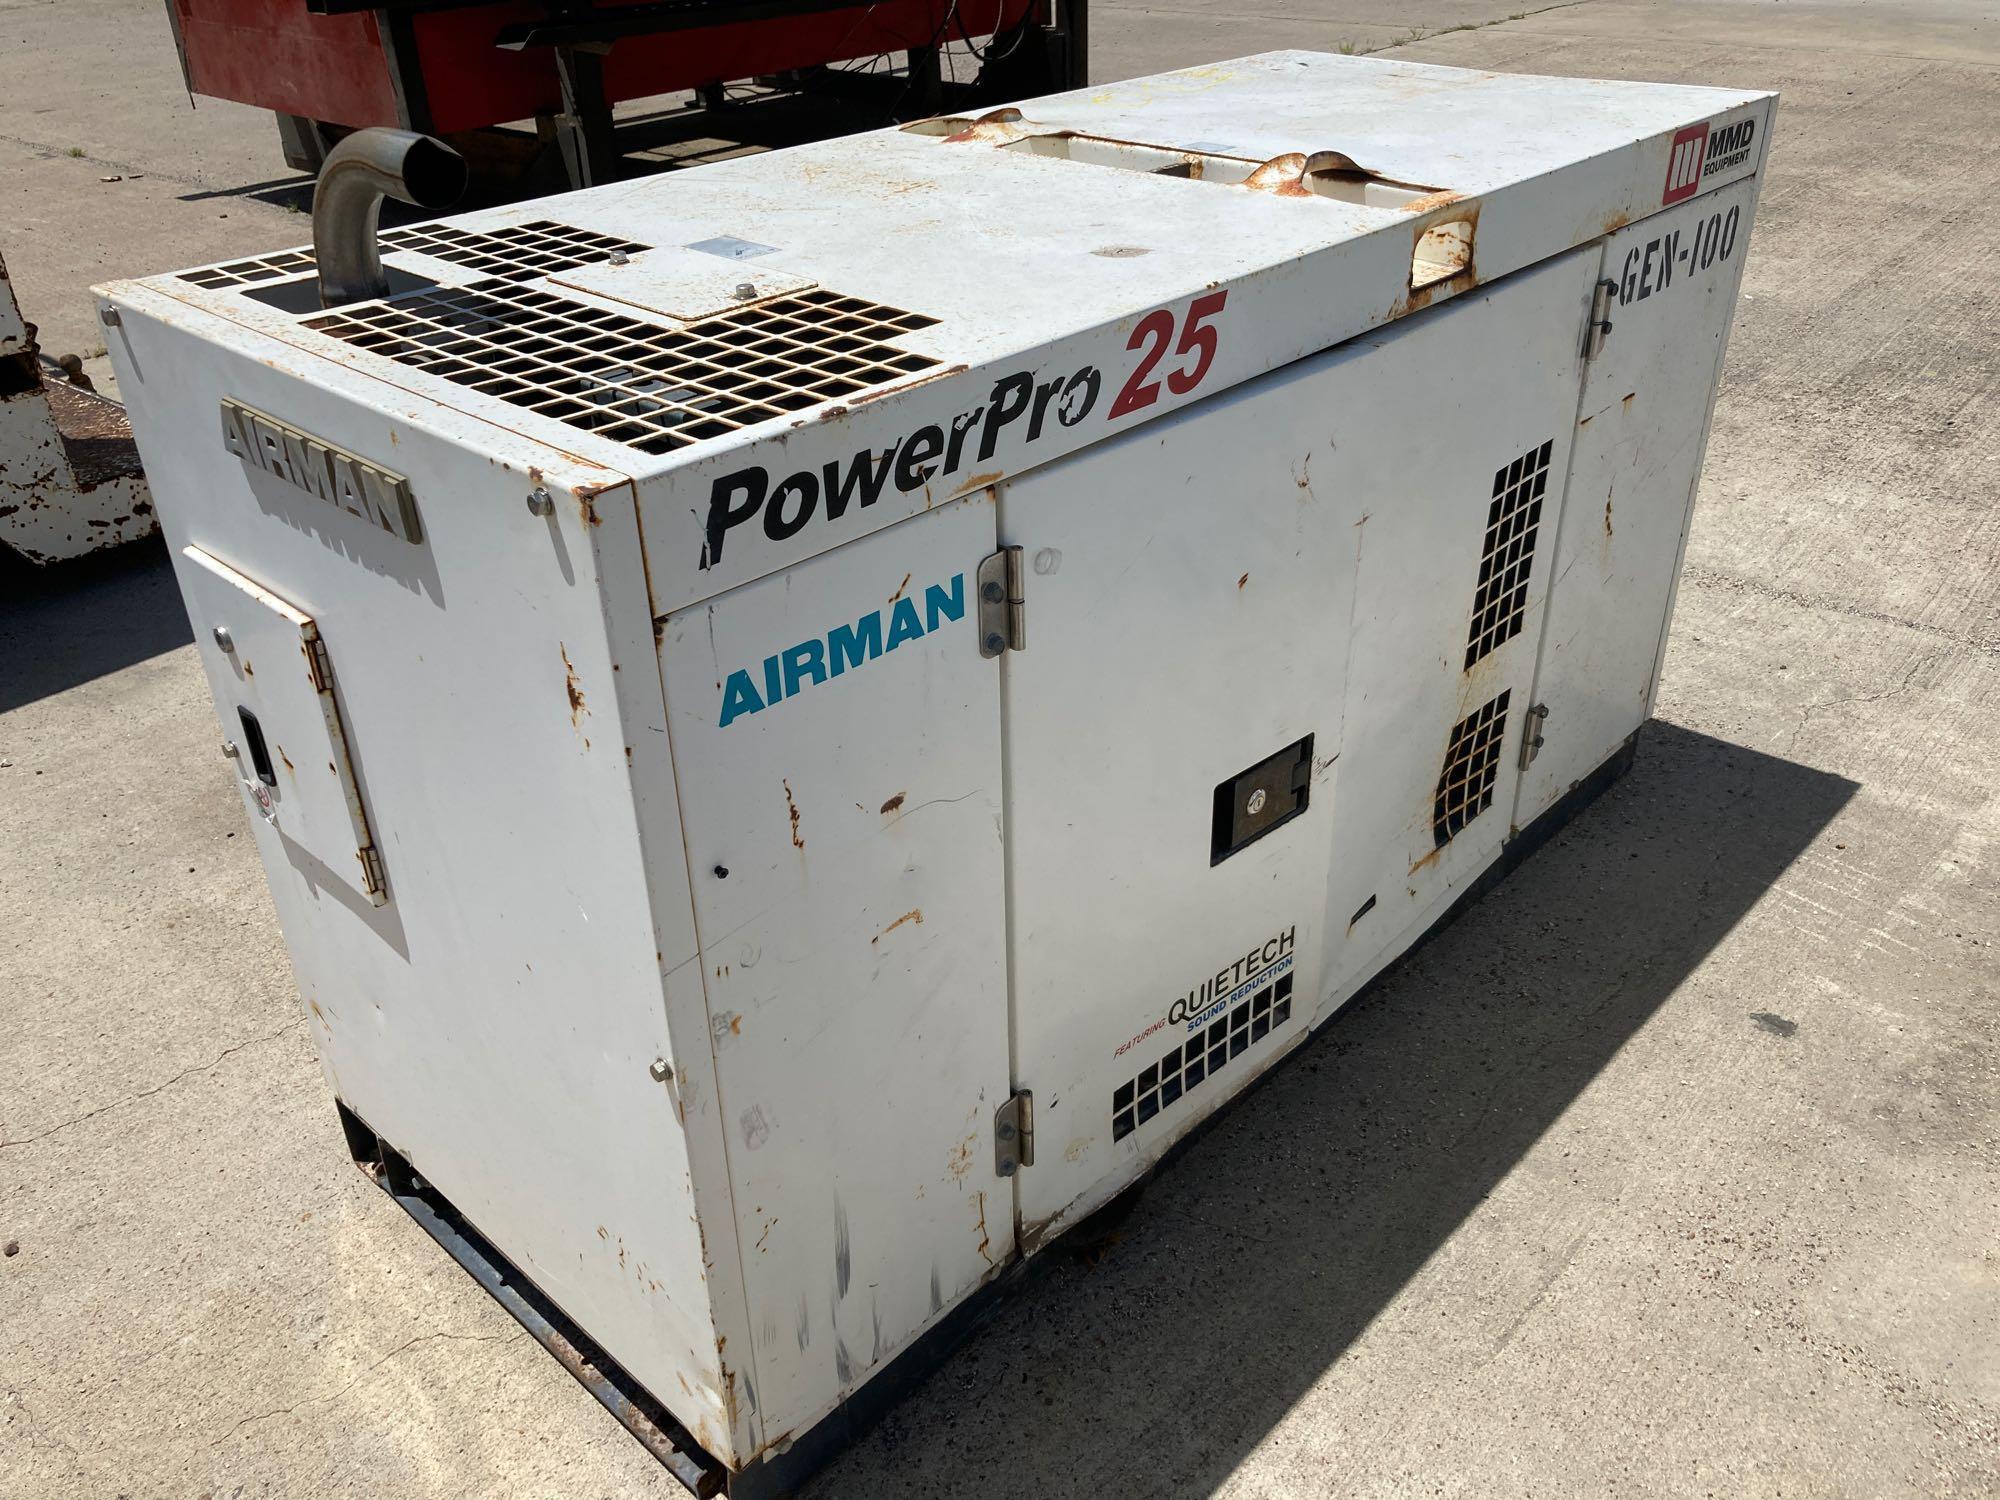 Power Pro 25 Airman Dsl. Power AC Generator